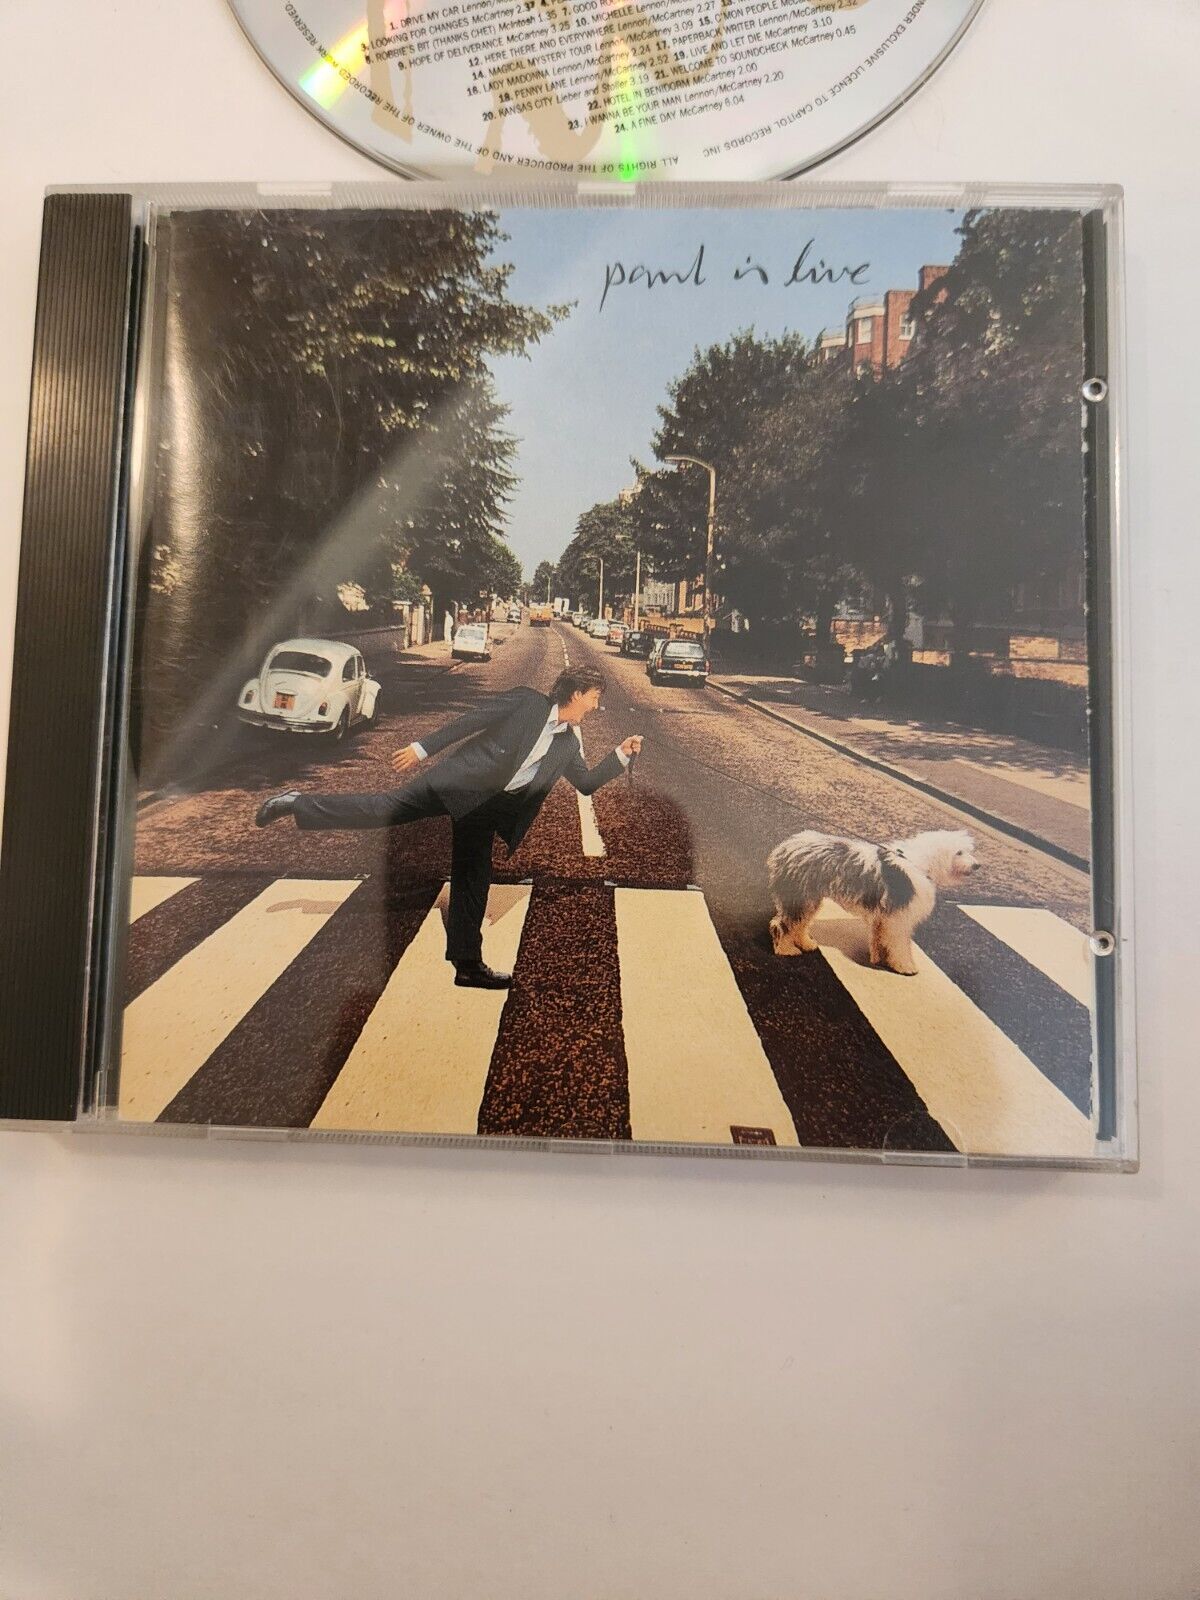 McCartney, Paul - Paul Is Live - McCartney, Paul CD The Fast 